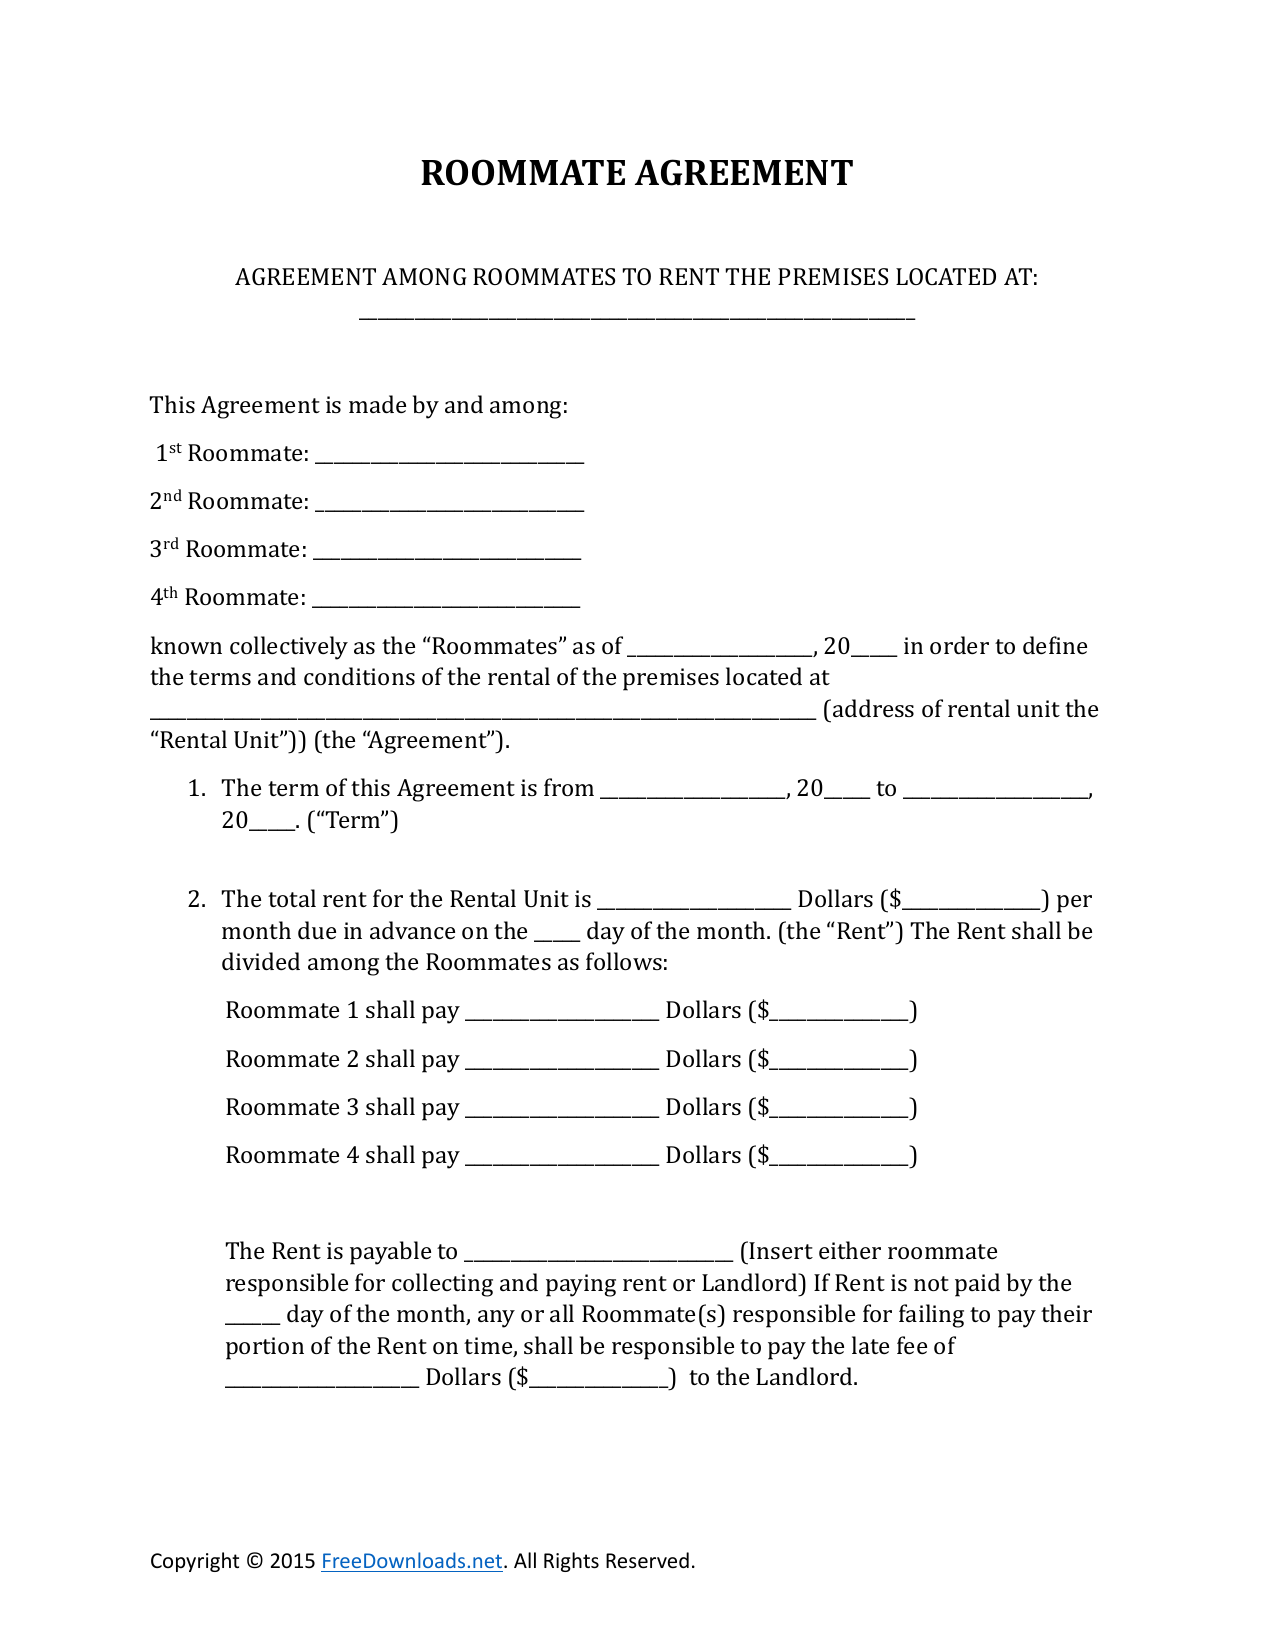 download-roommate-rental-lease-agreement-form-pdf-rtf-word-freedownloads